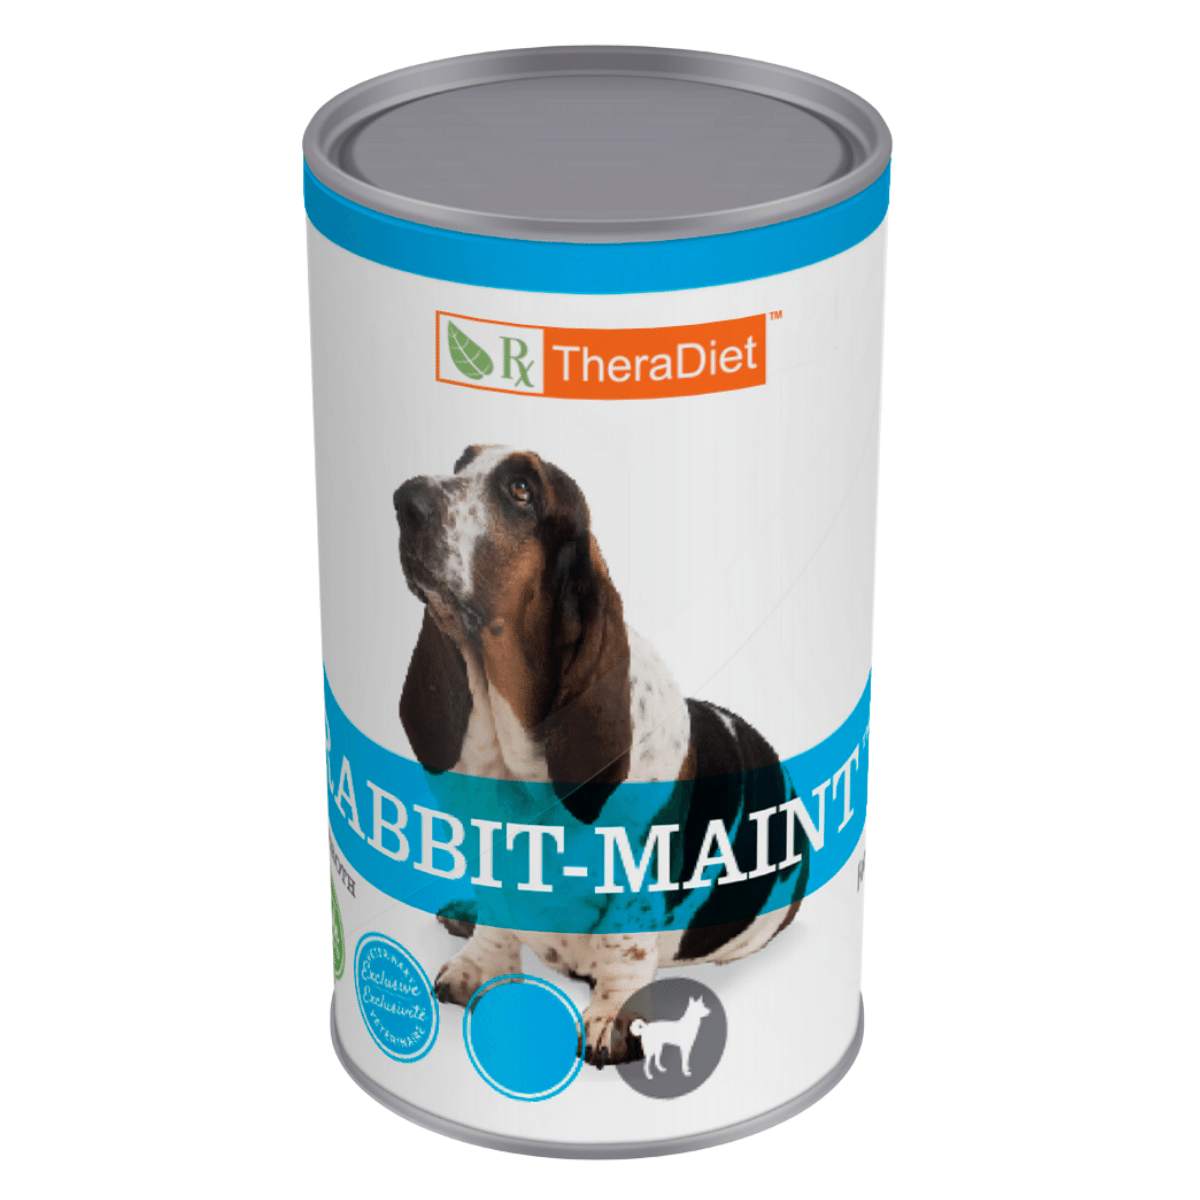 Rabbit-MAINT Canned Paté Dog Food